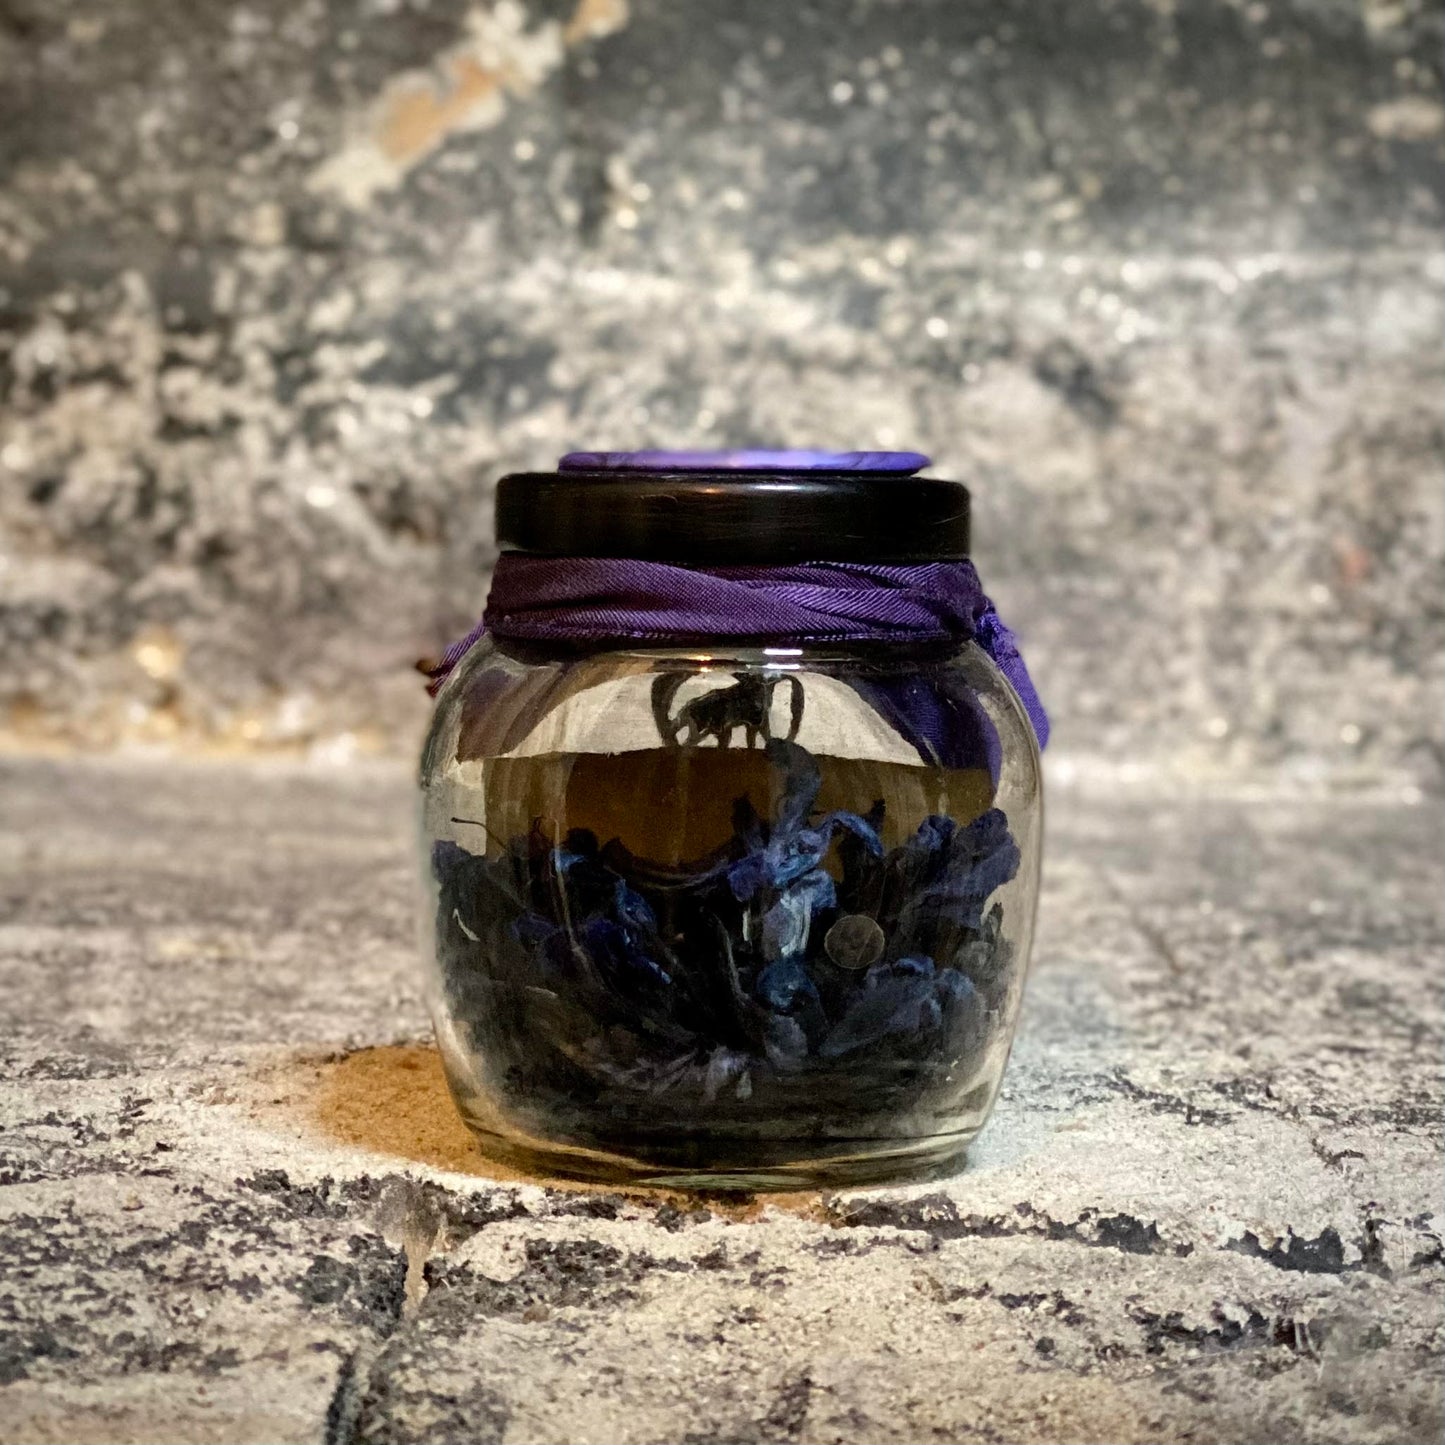 Dried Wolfsbane, A Decorative Apothecary Jar